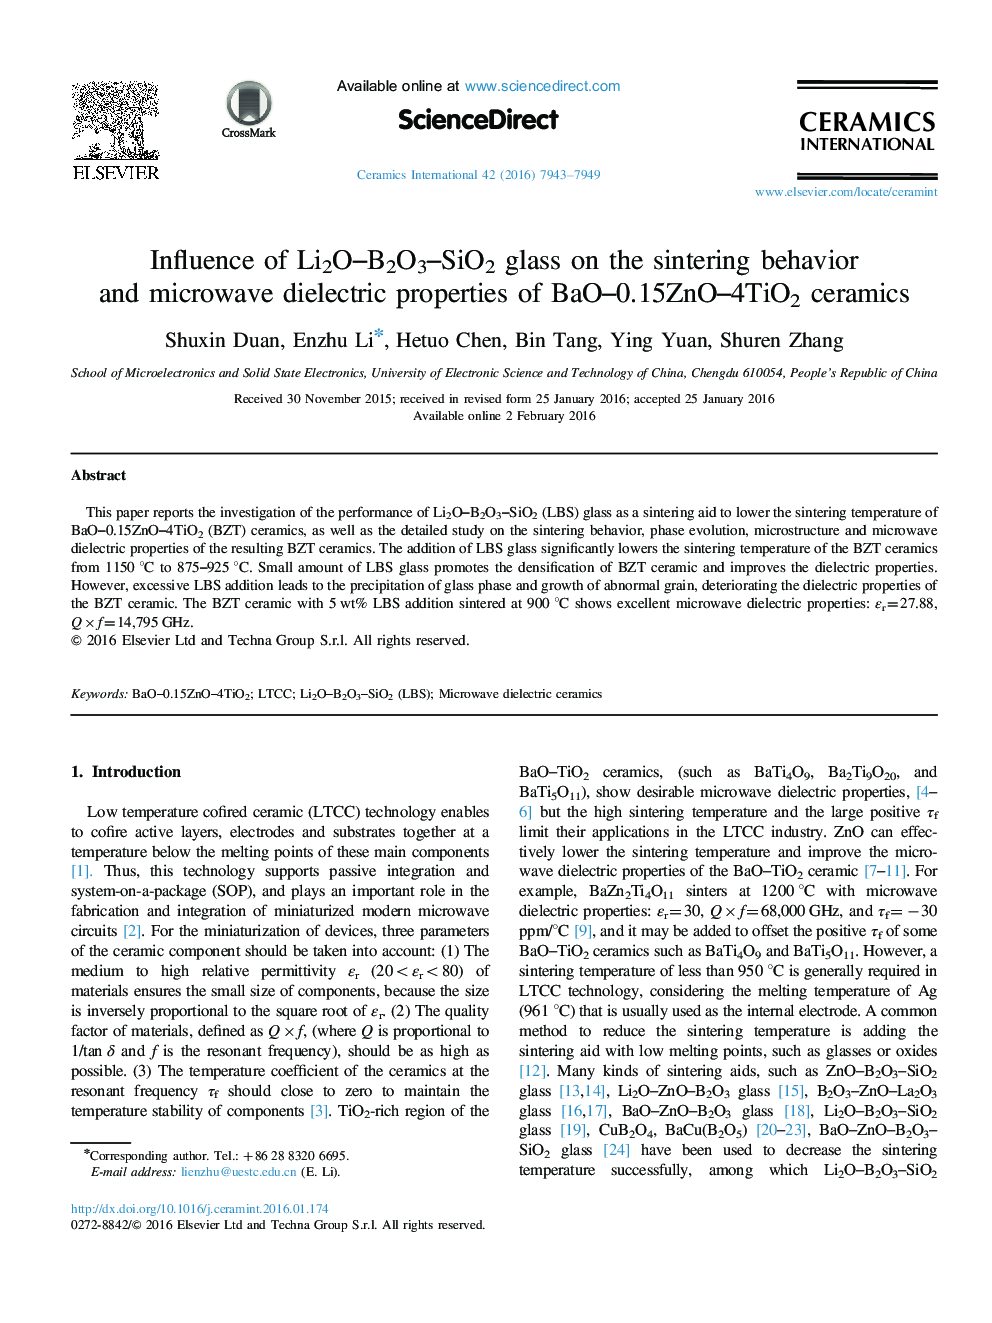 Influence of Li2O-B2O3-SiO2 glass on the sintering behavior and microwave dielectric properties of BaO-0.15ZnO-4TiO2 ceramics